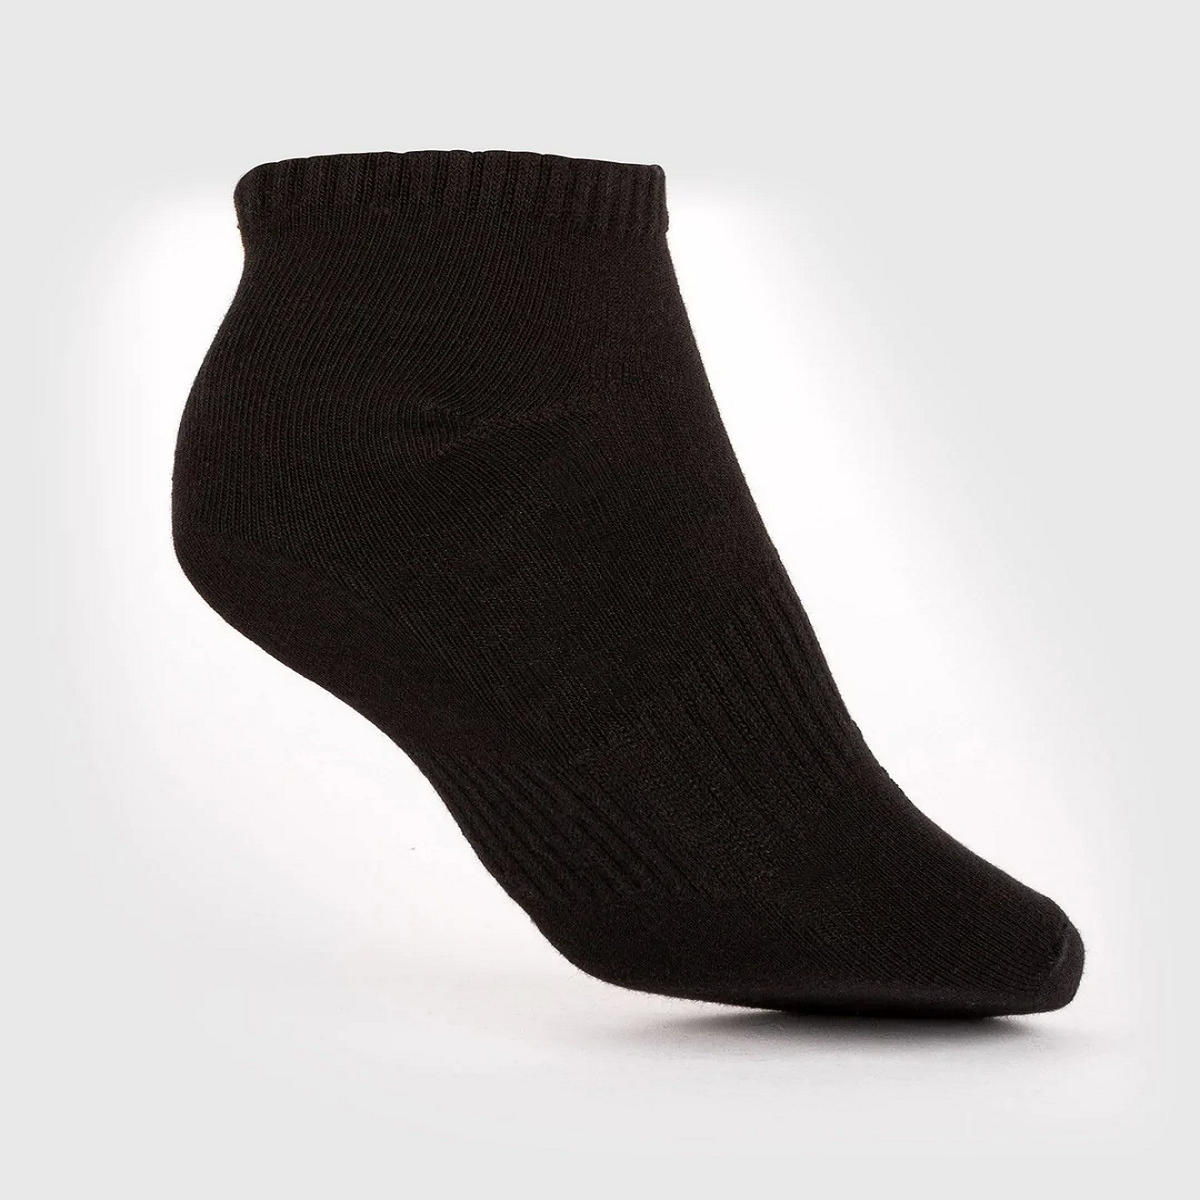 Venum Classic Footlet Socks 3-Pack - Black/White Venum